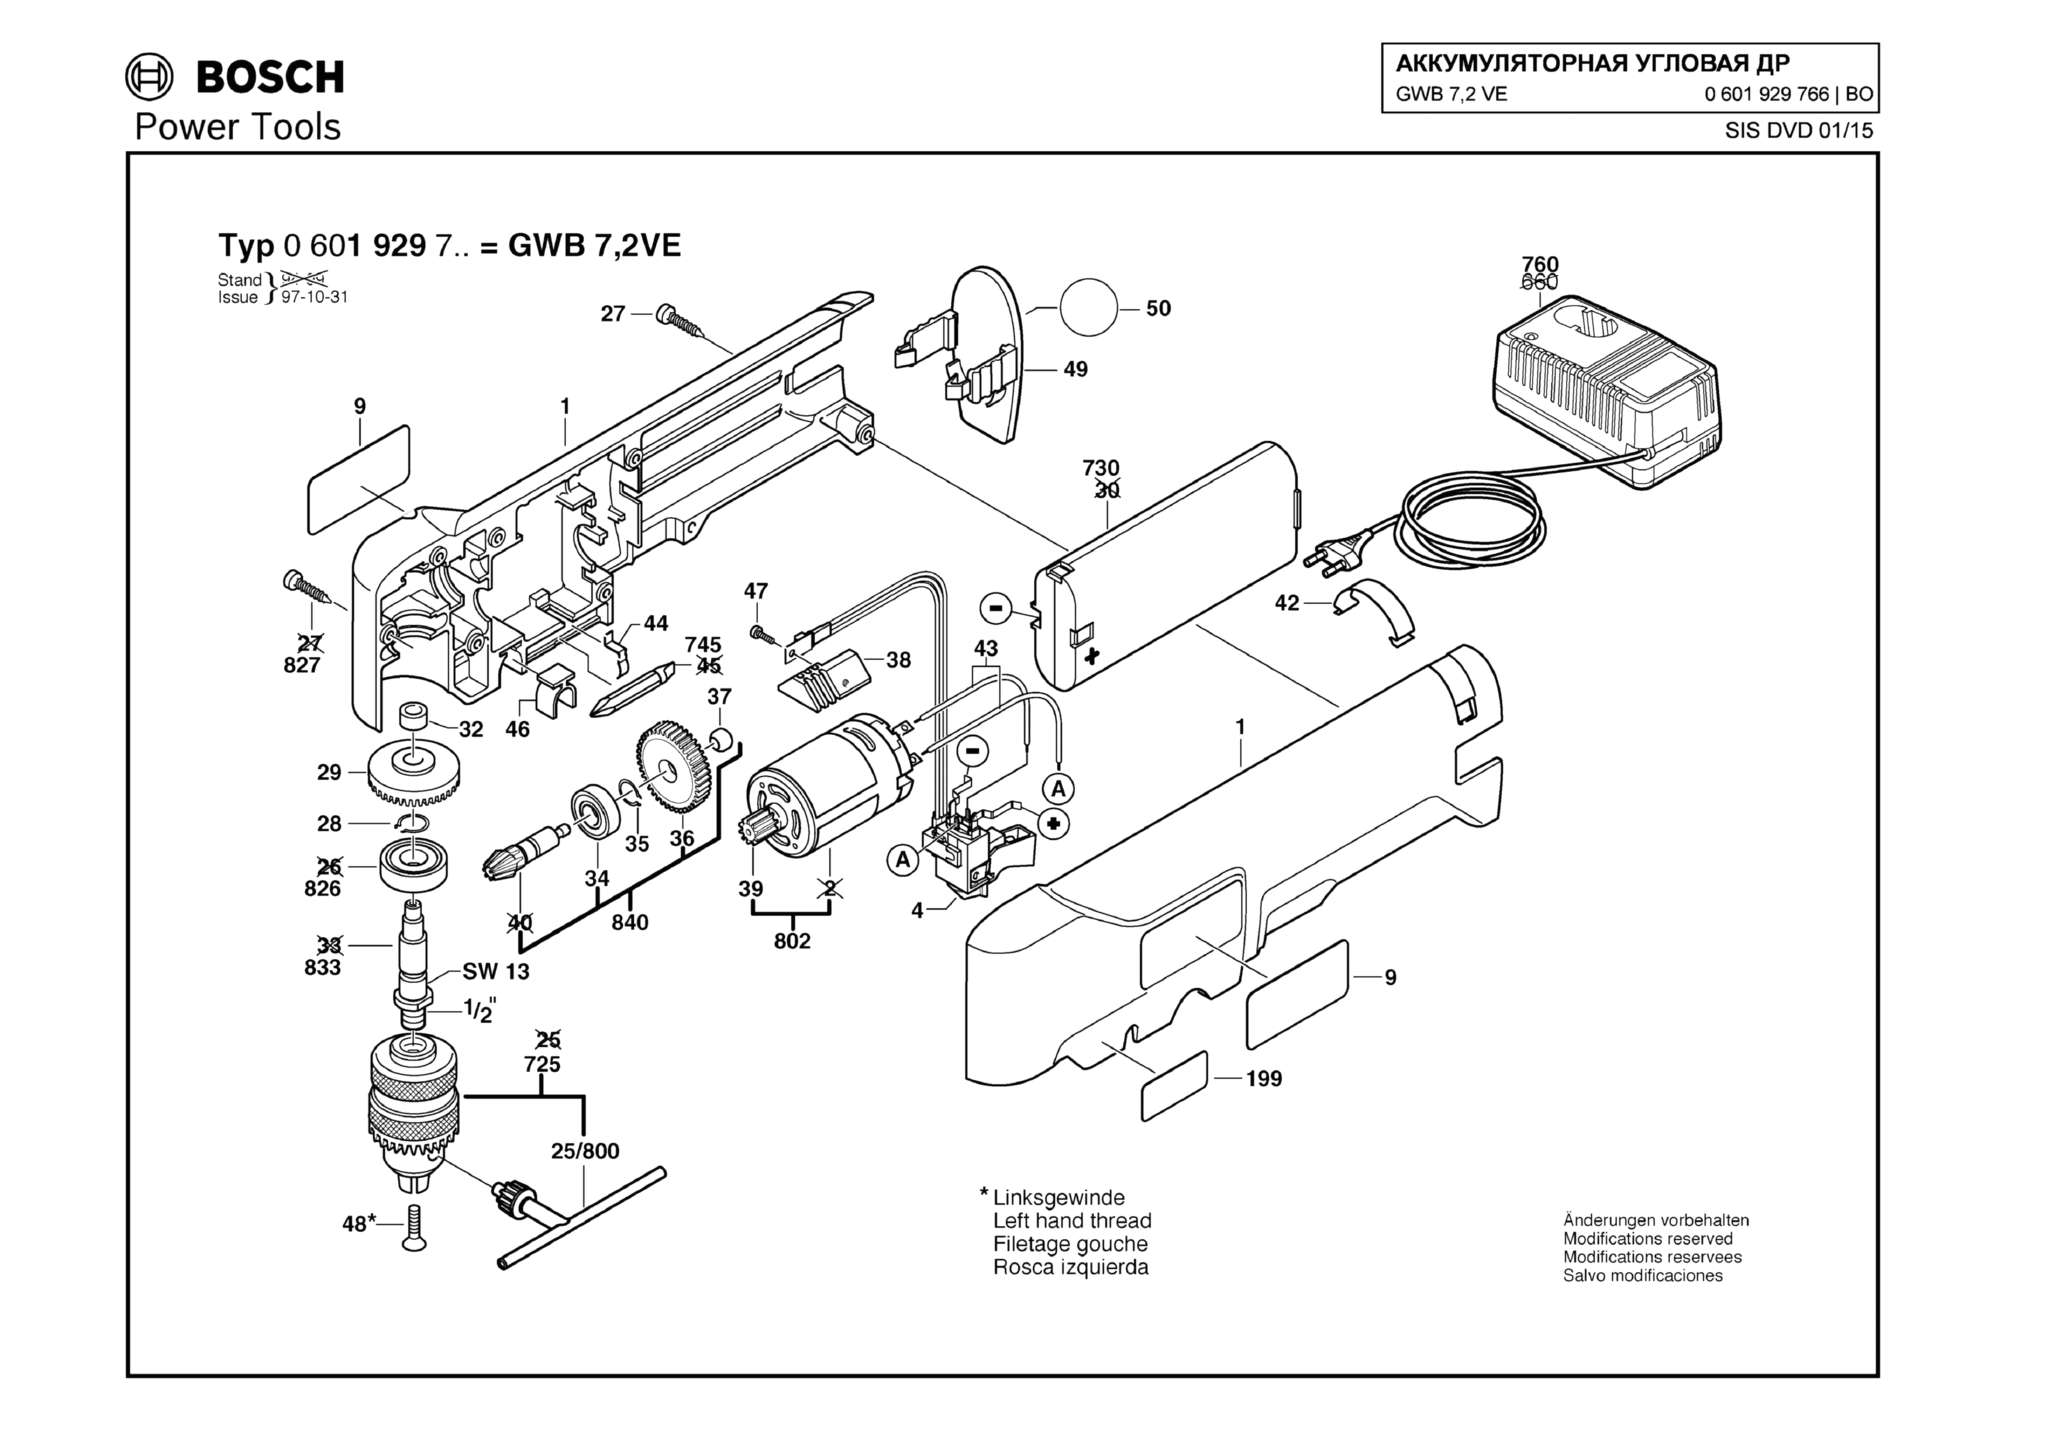 Запчасти, схема и деталировка Bosch GWB 7,2 VE (ТИП 0601929766)